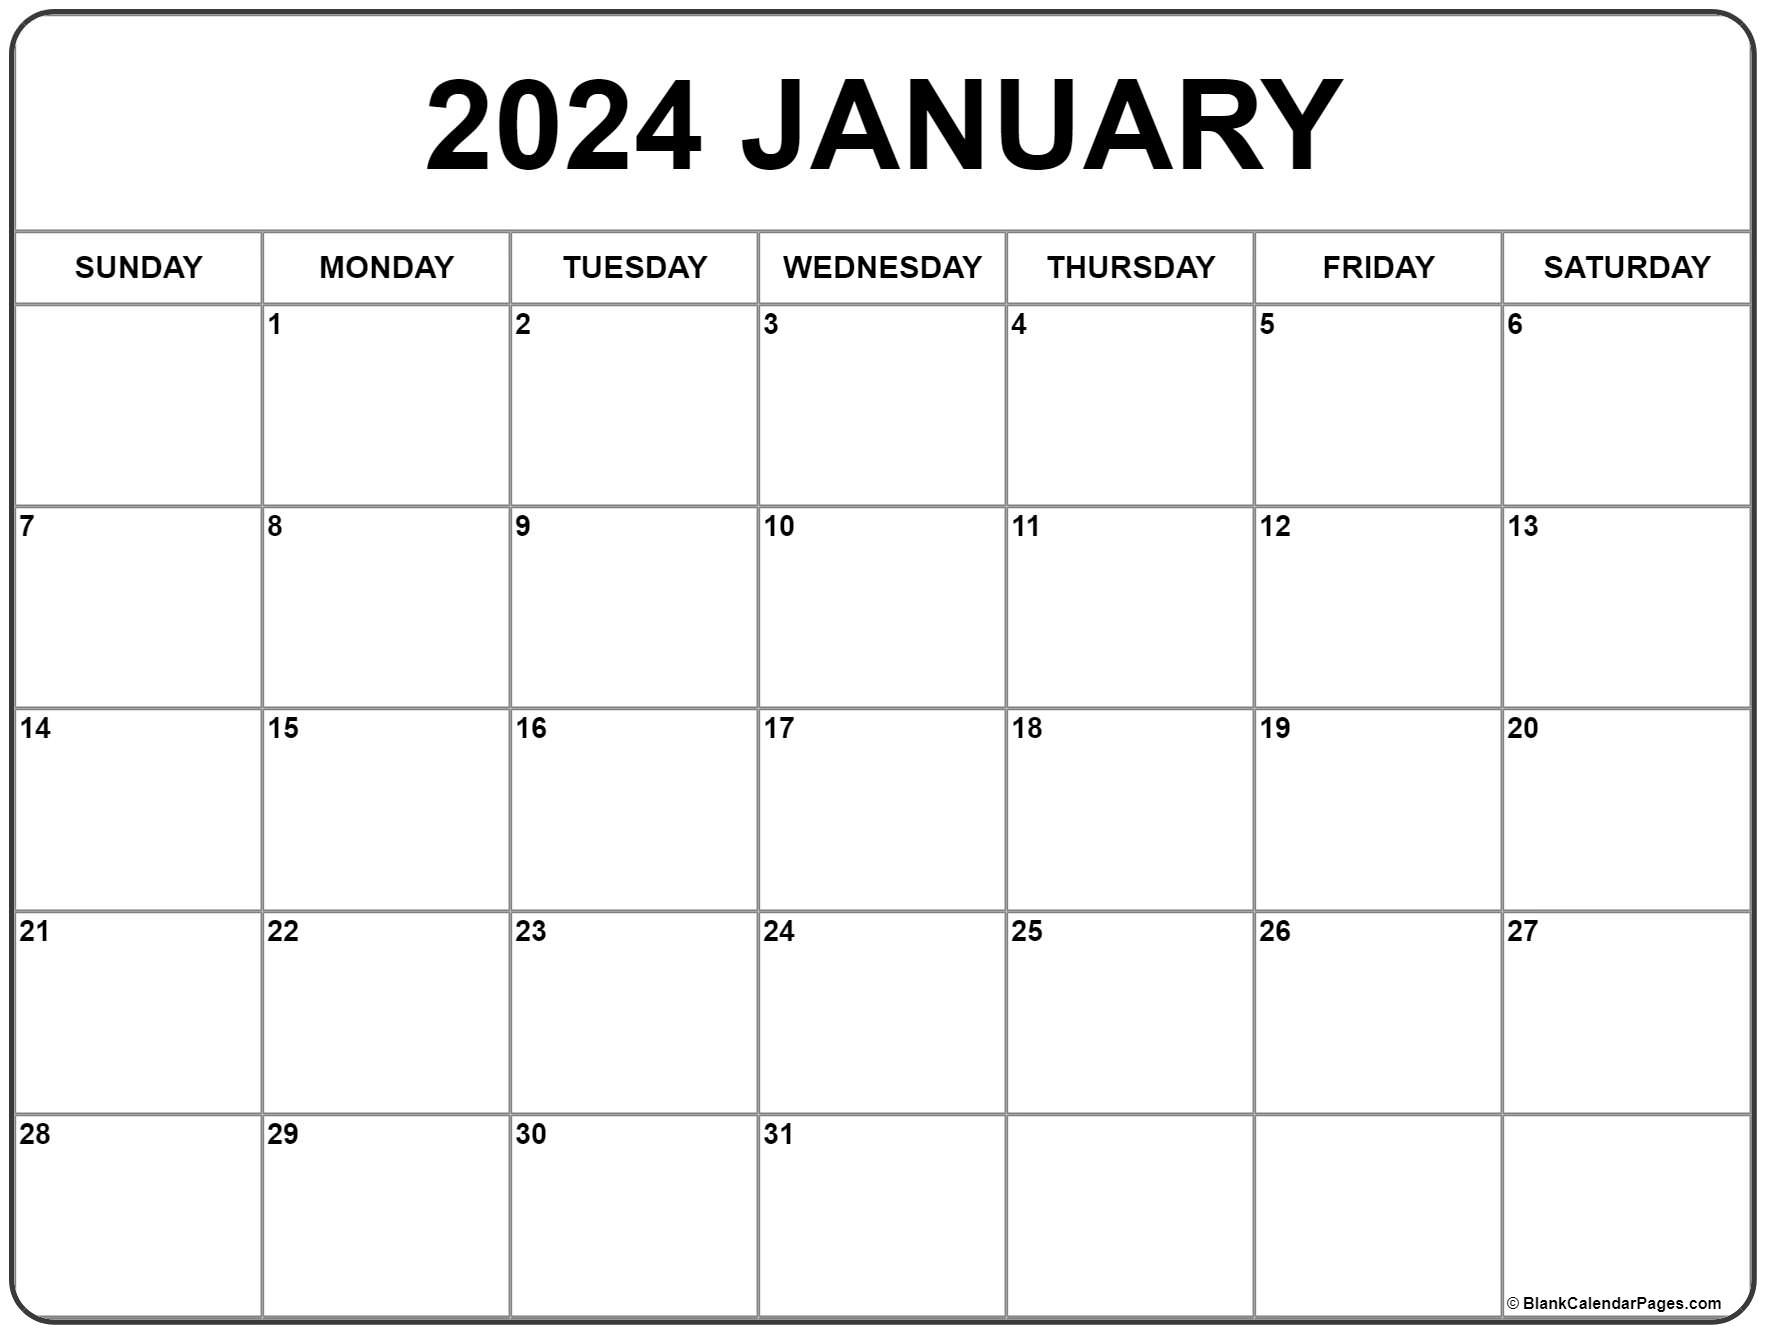 January 2024 Calendar | Free Printable Calendar for Calendar 2024 January Printable